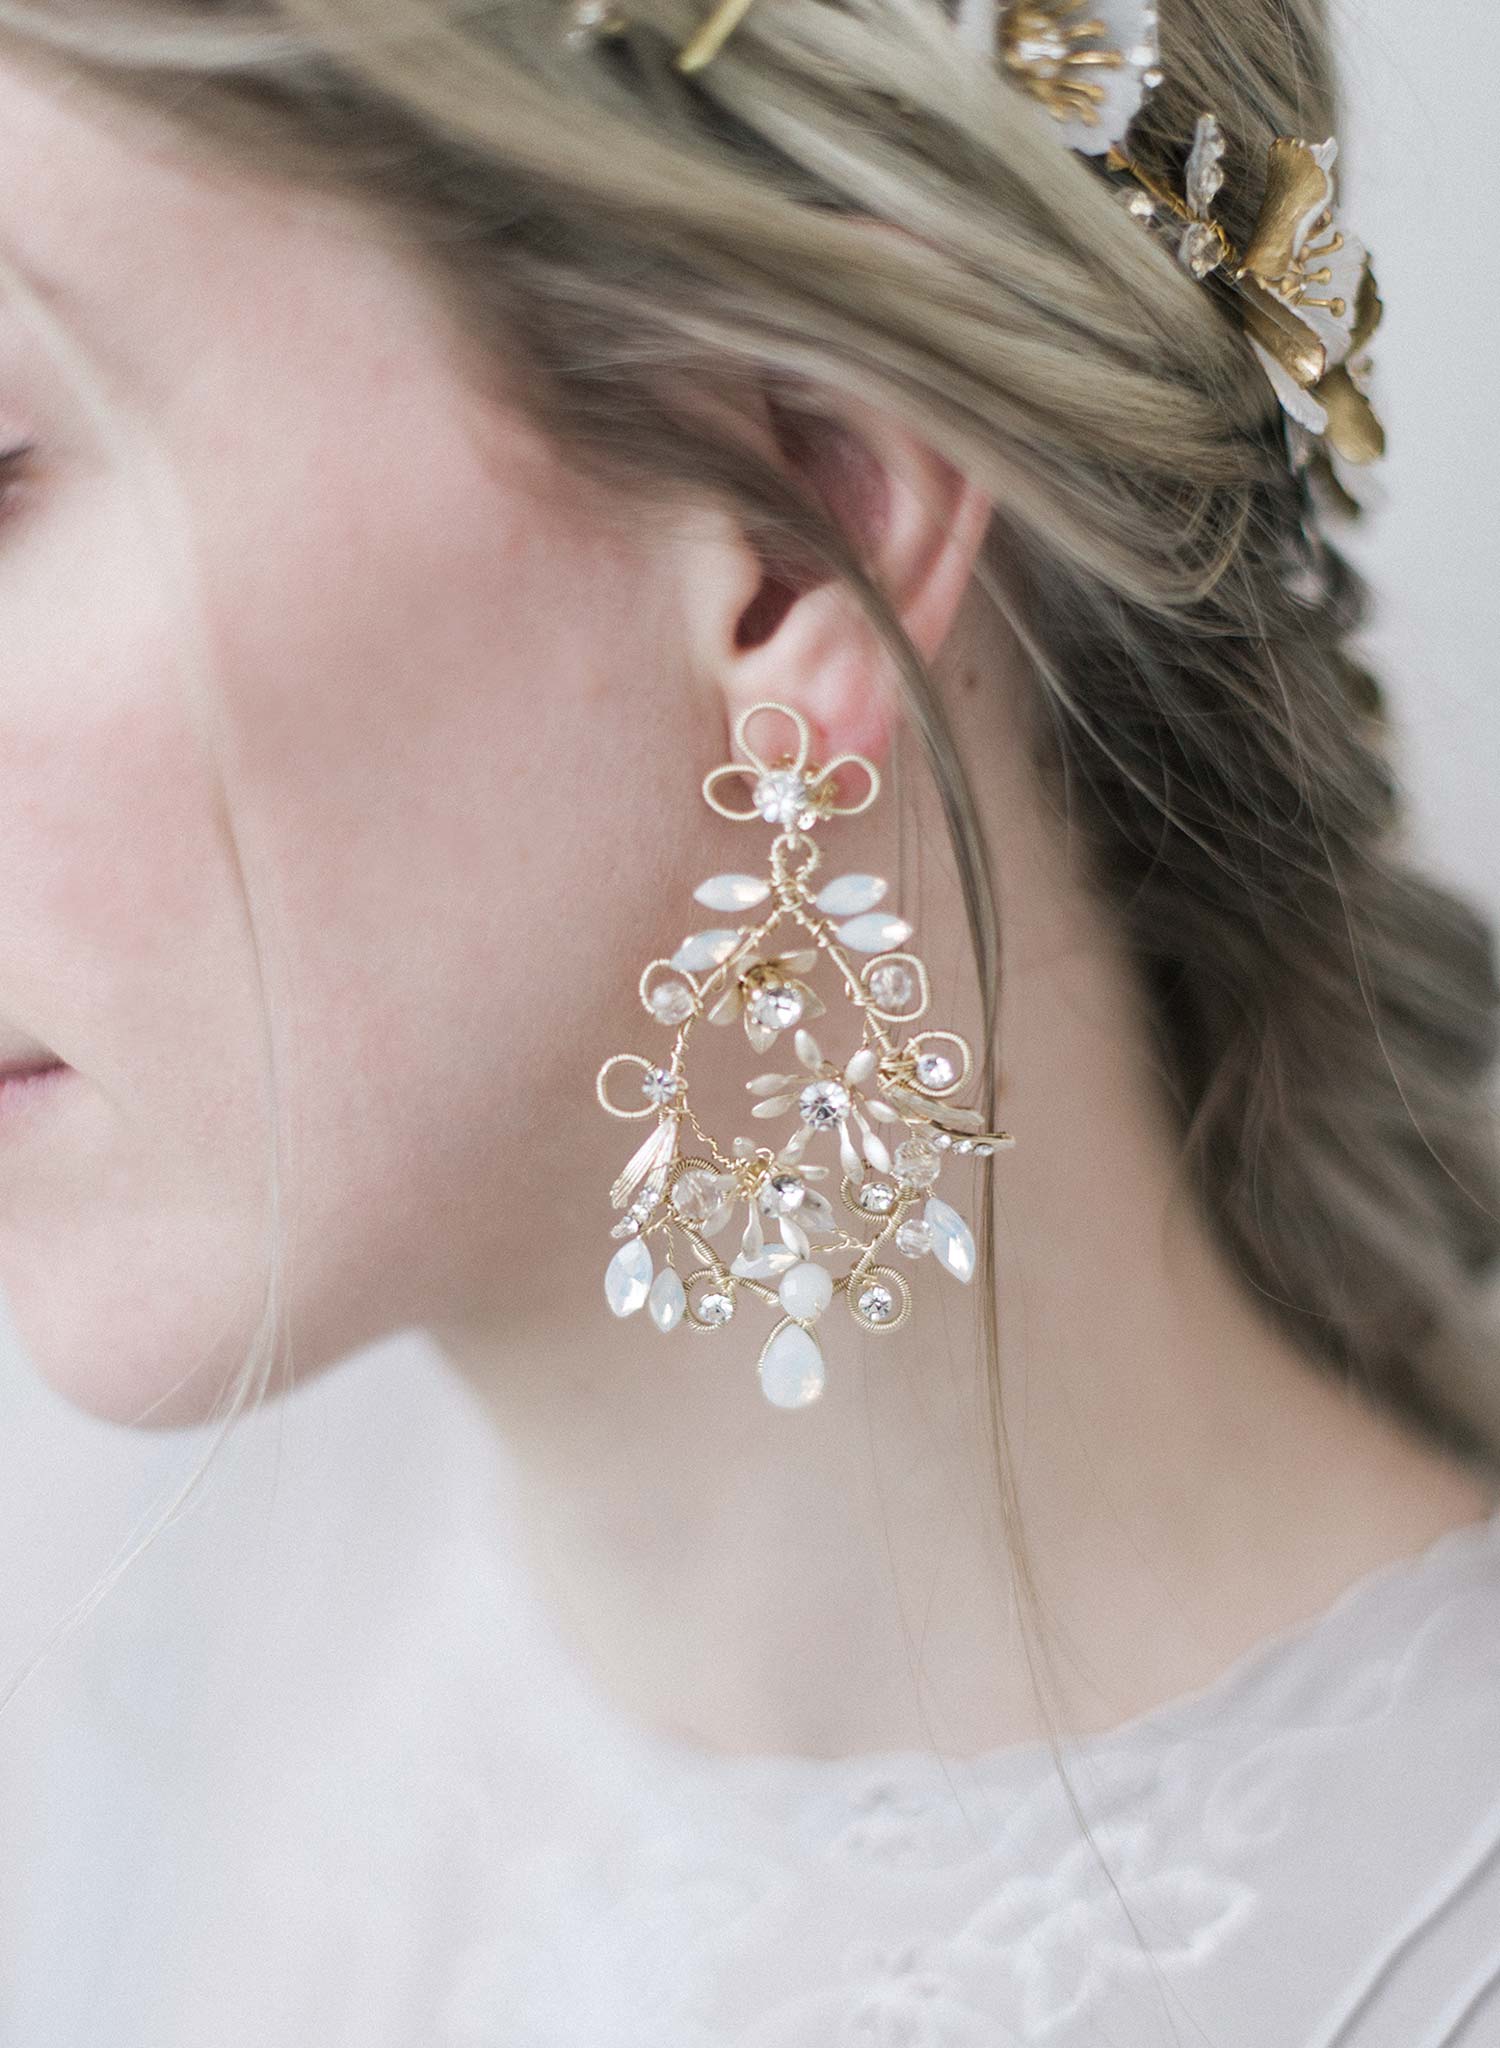 Mermaid's chandelier earrings - Style #911